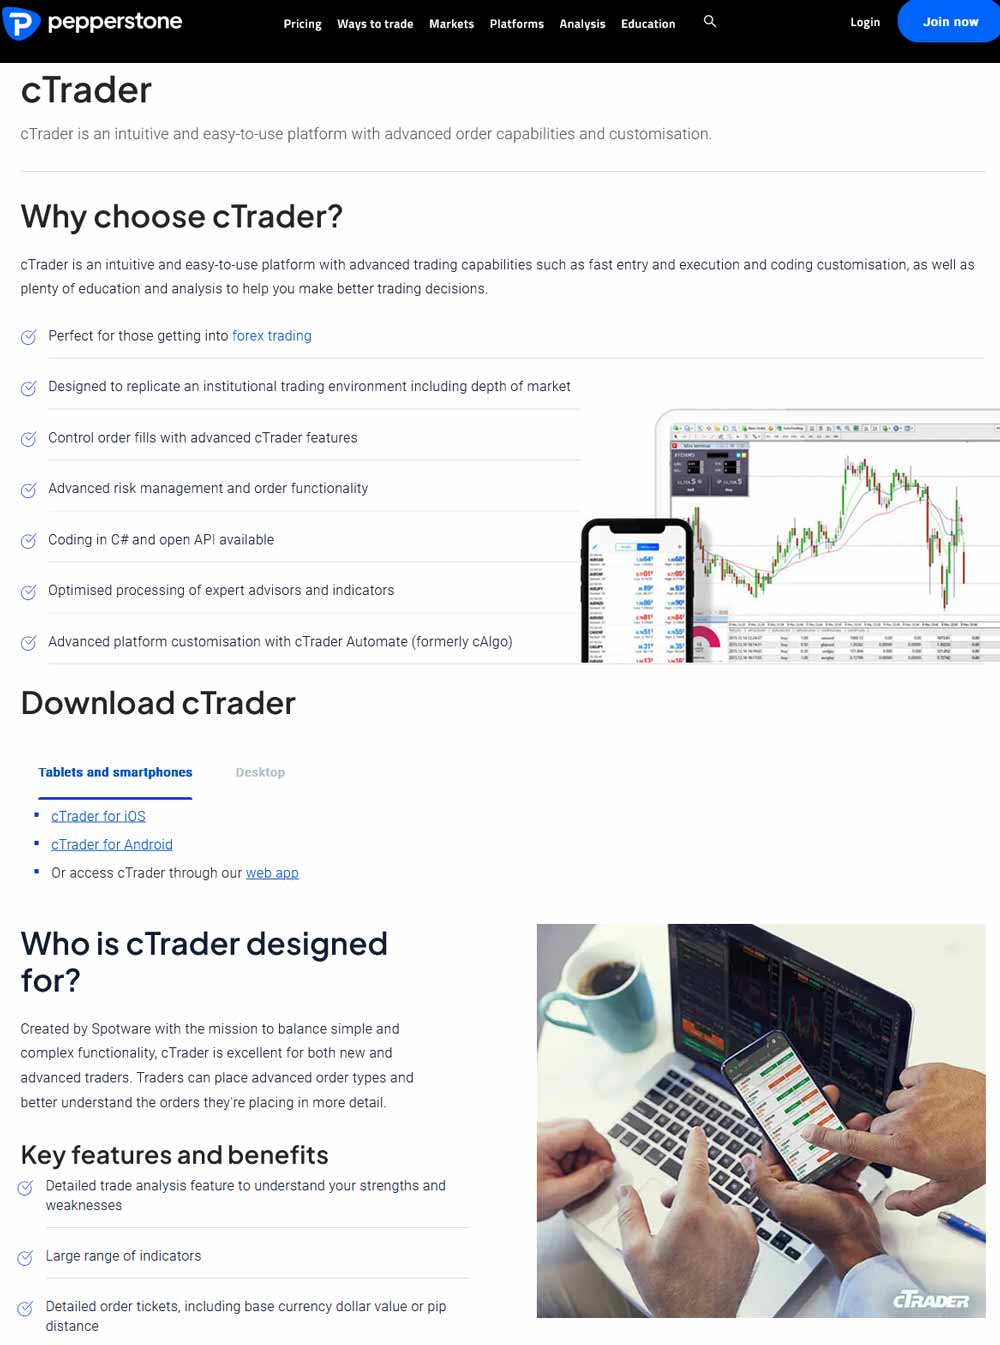 RoboForex cTrader trading platform